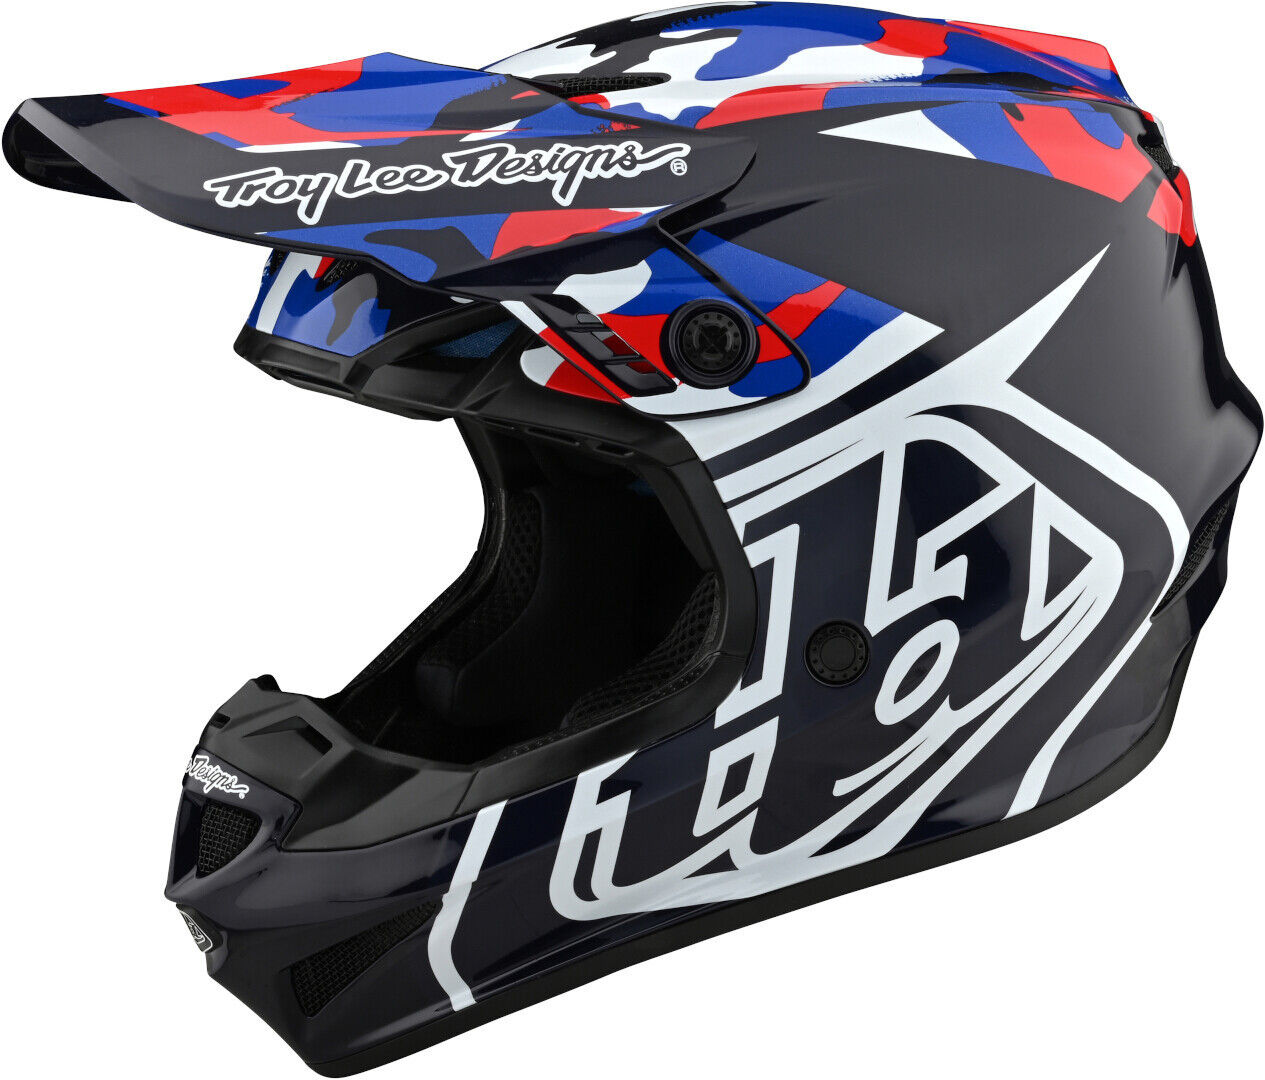 Lee Troy Lee Designs One & Done Gp Overload Camo Motocross Helmet  - Multicolored